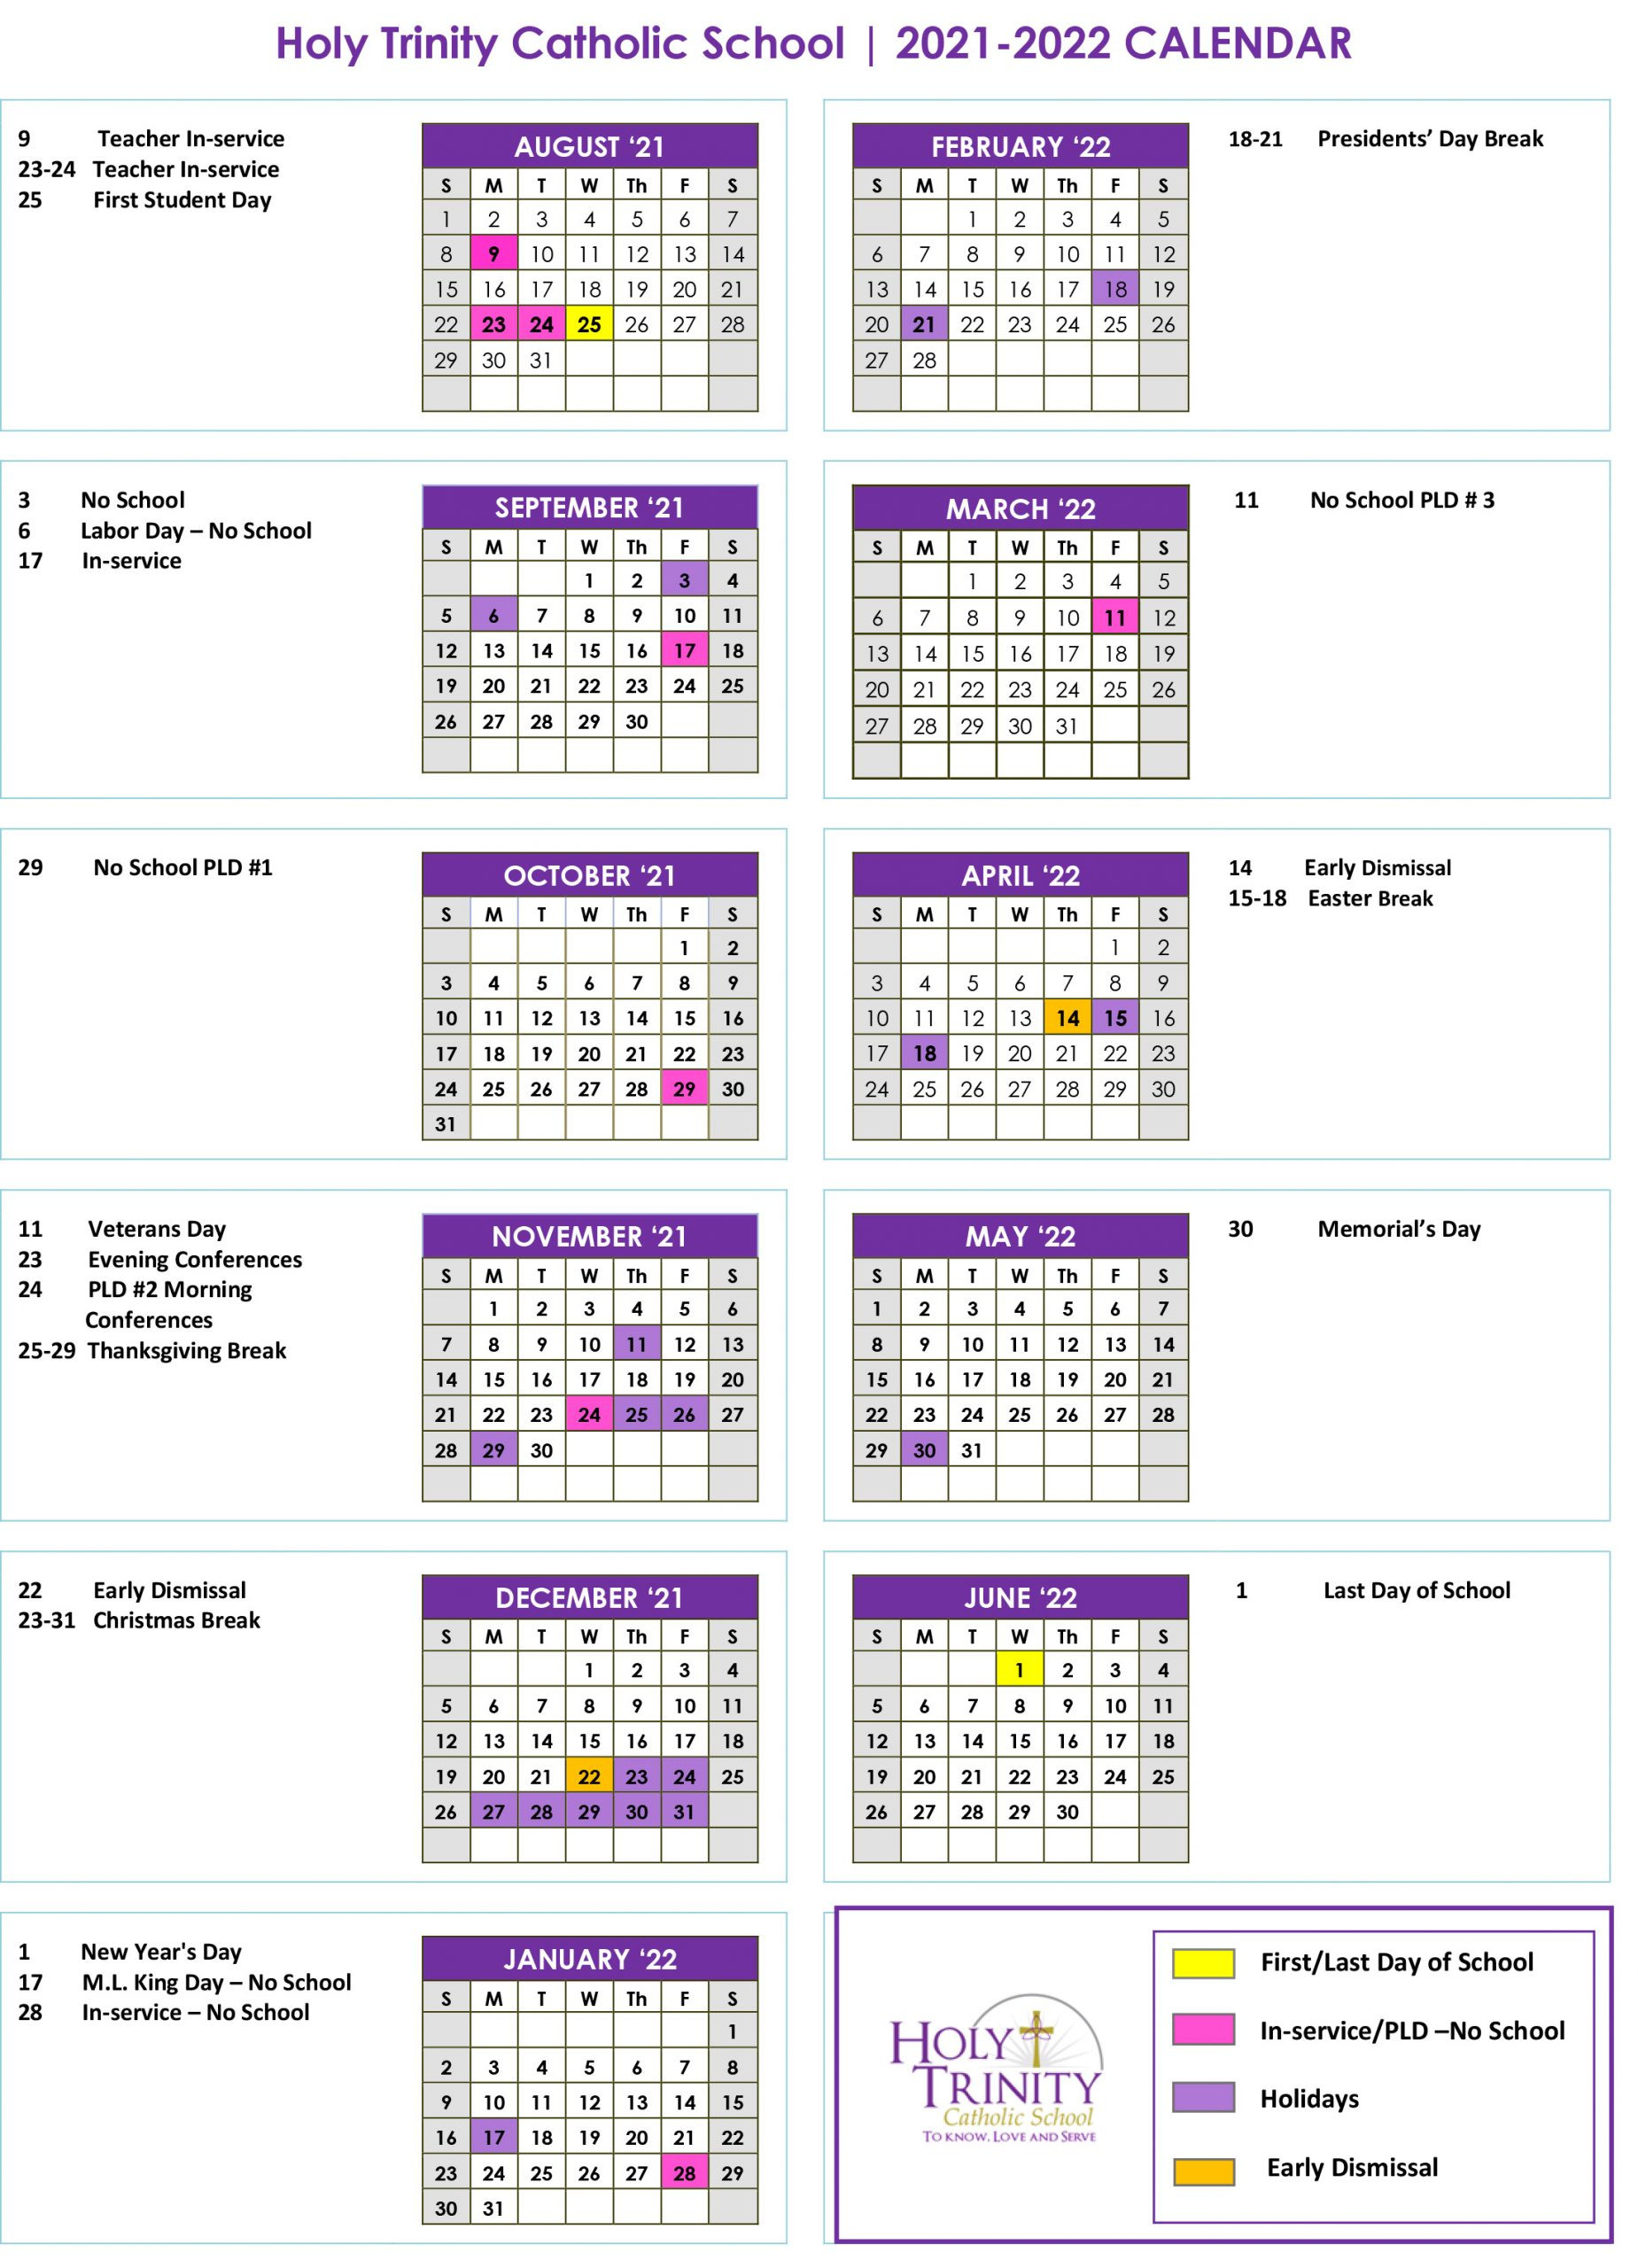 Academic Calendar 2021-2022 - Holy Trinity Catholic School, Altoona Pa-2021 And 2022 School Calendar Free Printable